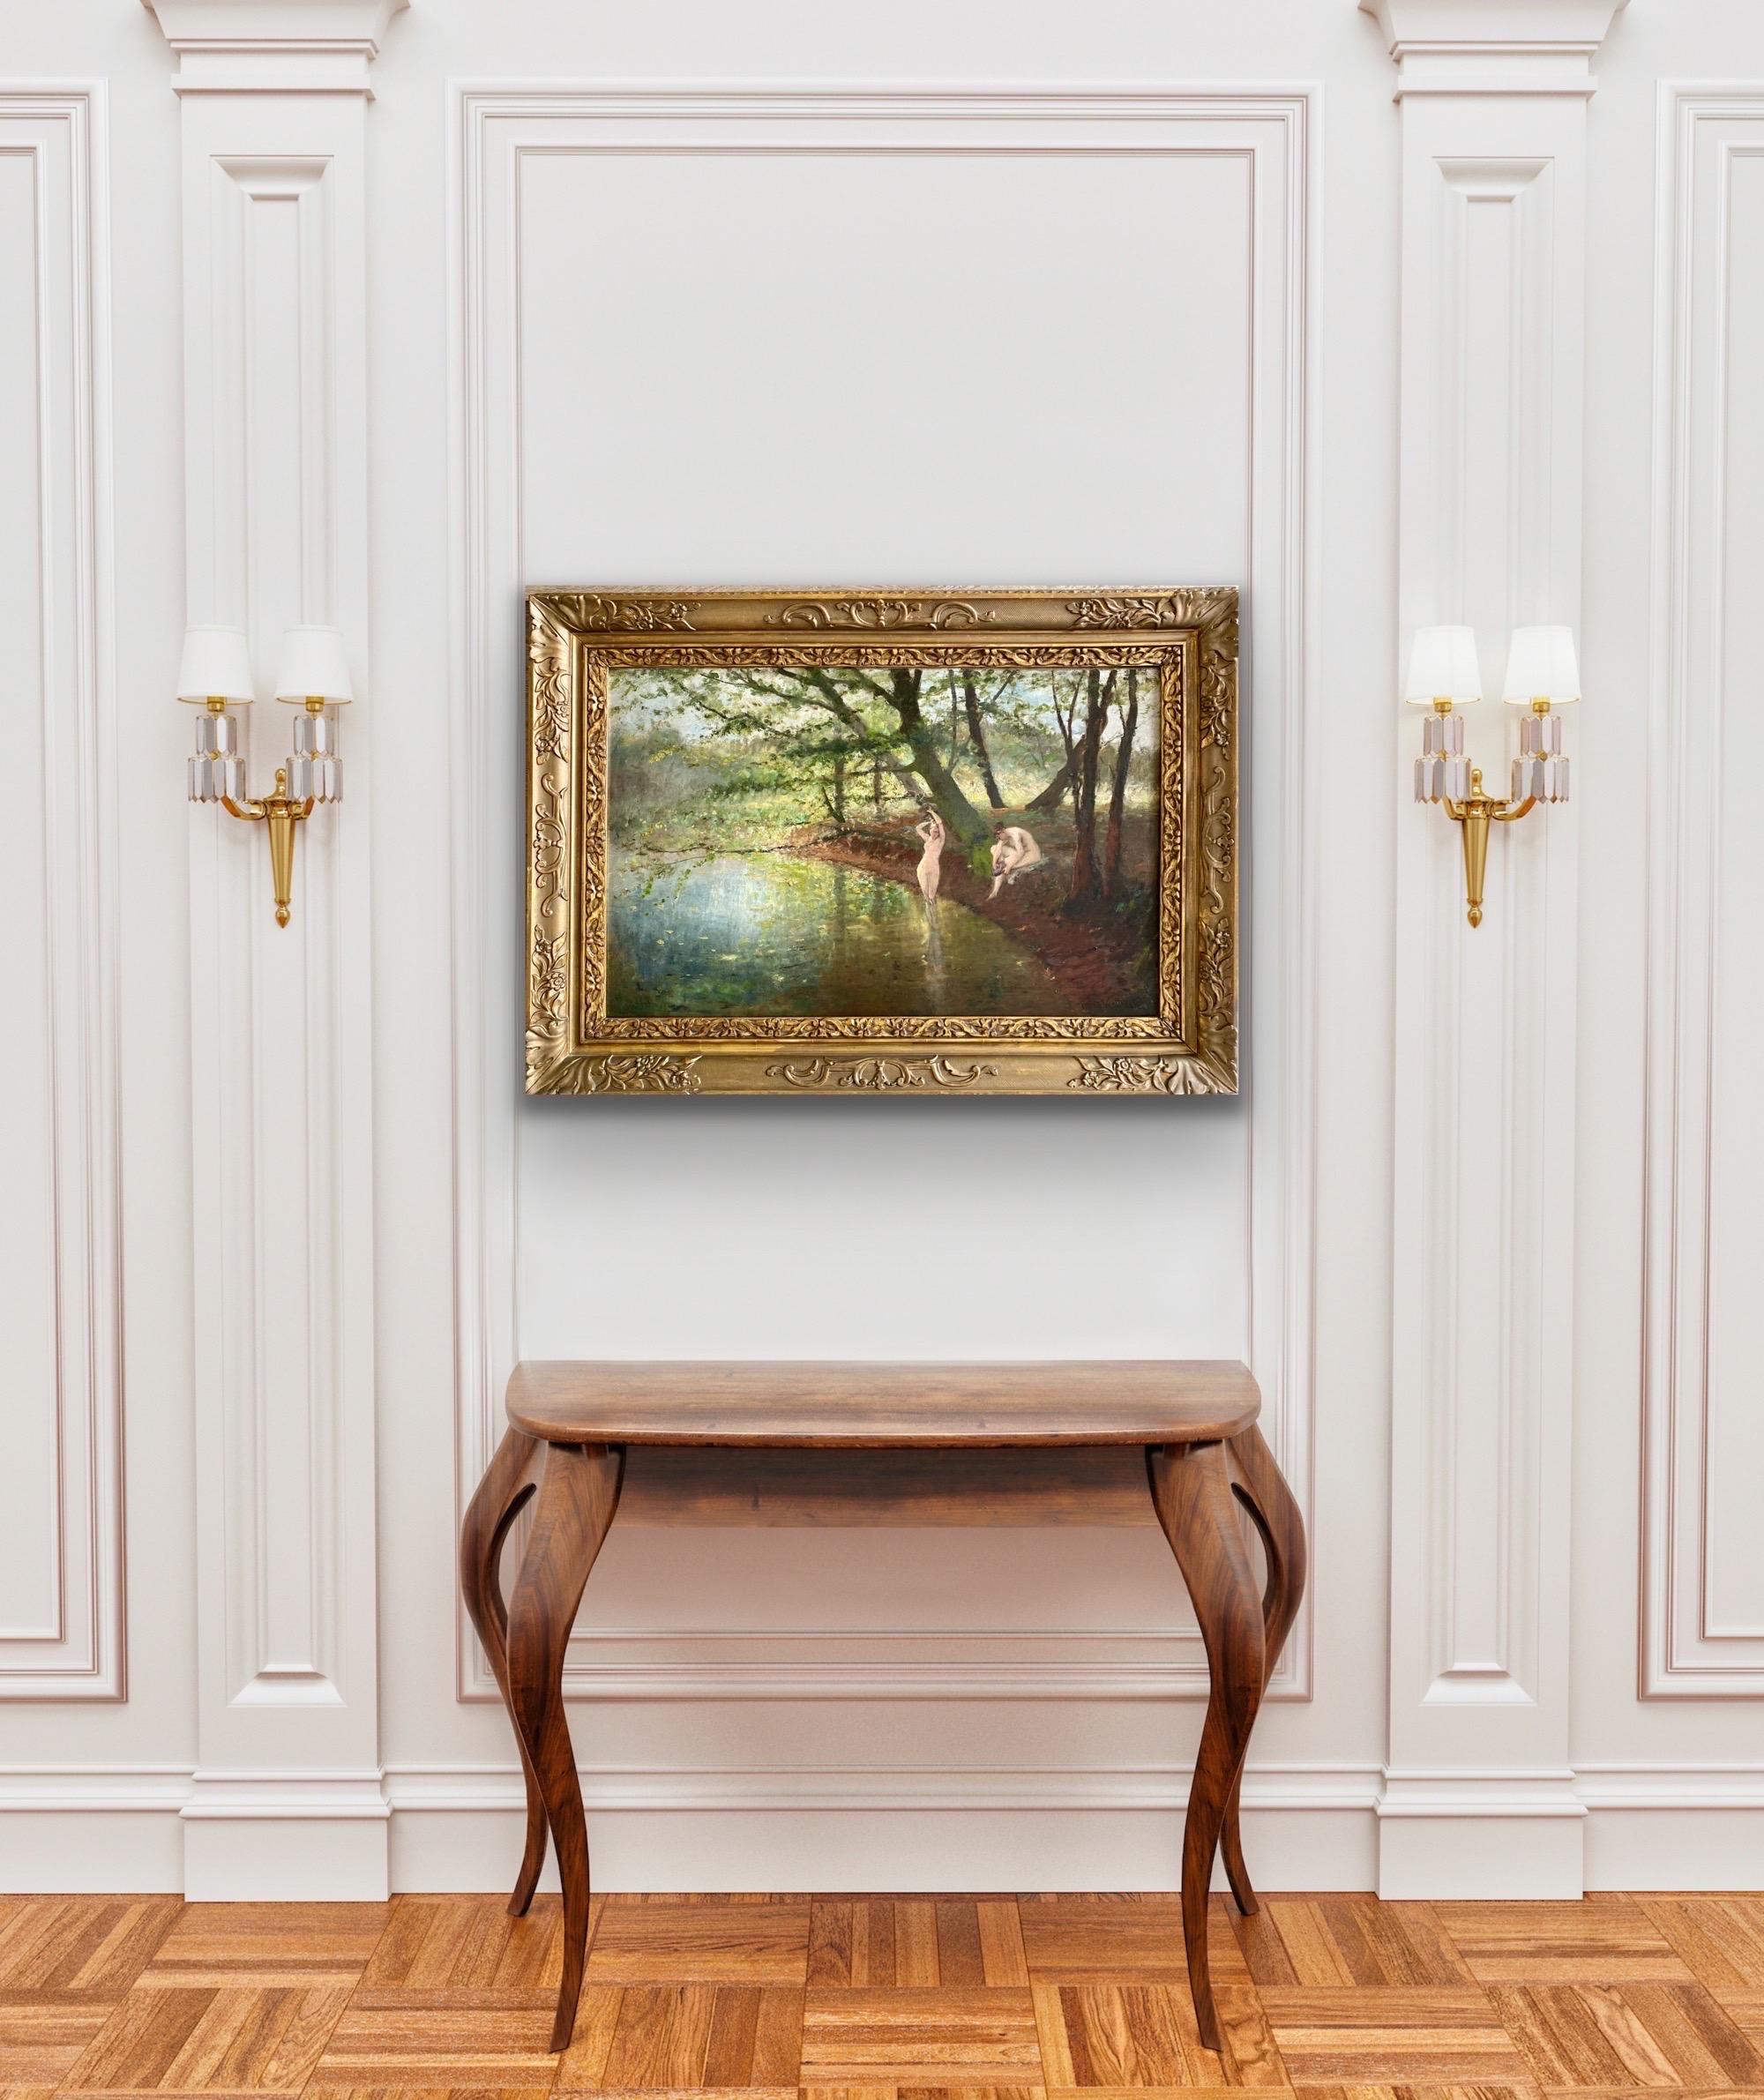 19th century impressionist painting - Les Baigneuses - Nude forest barbizon 2